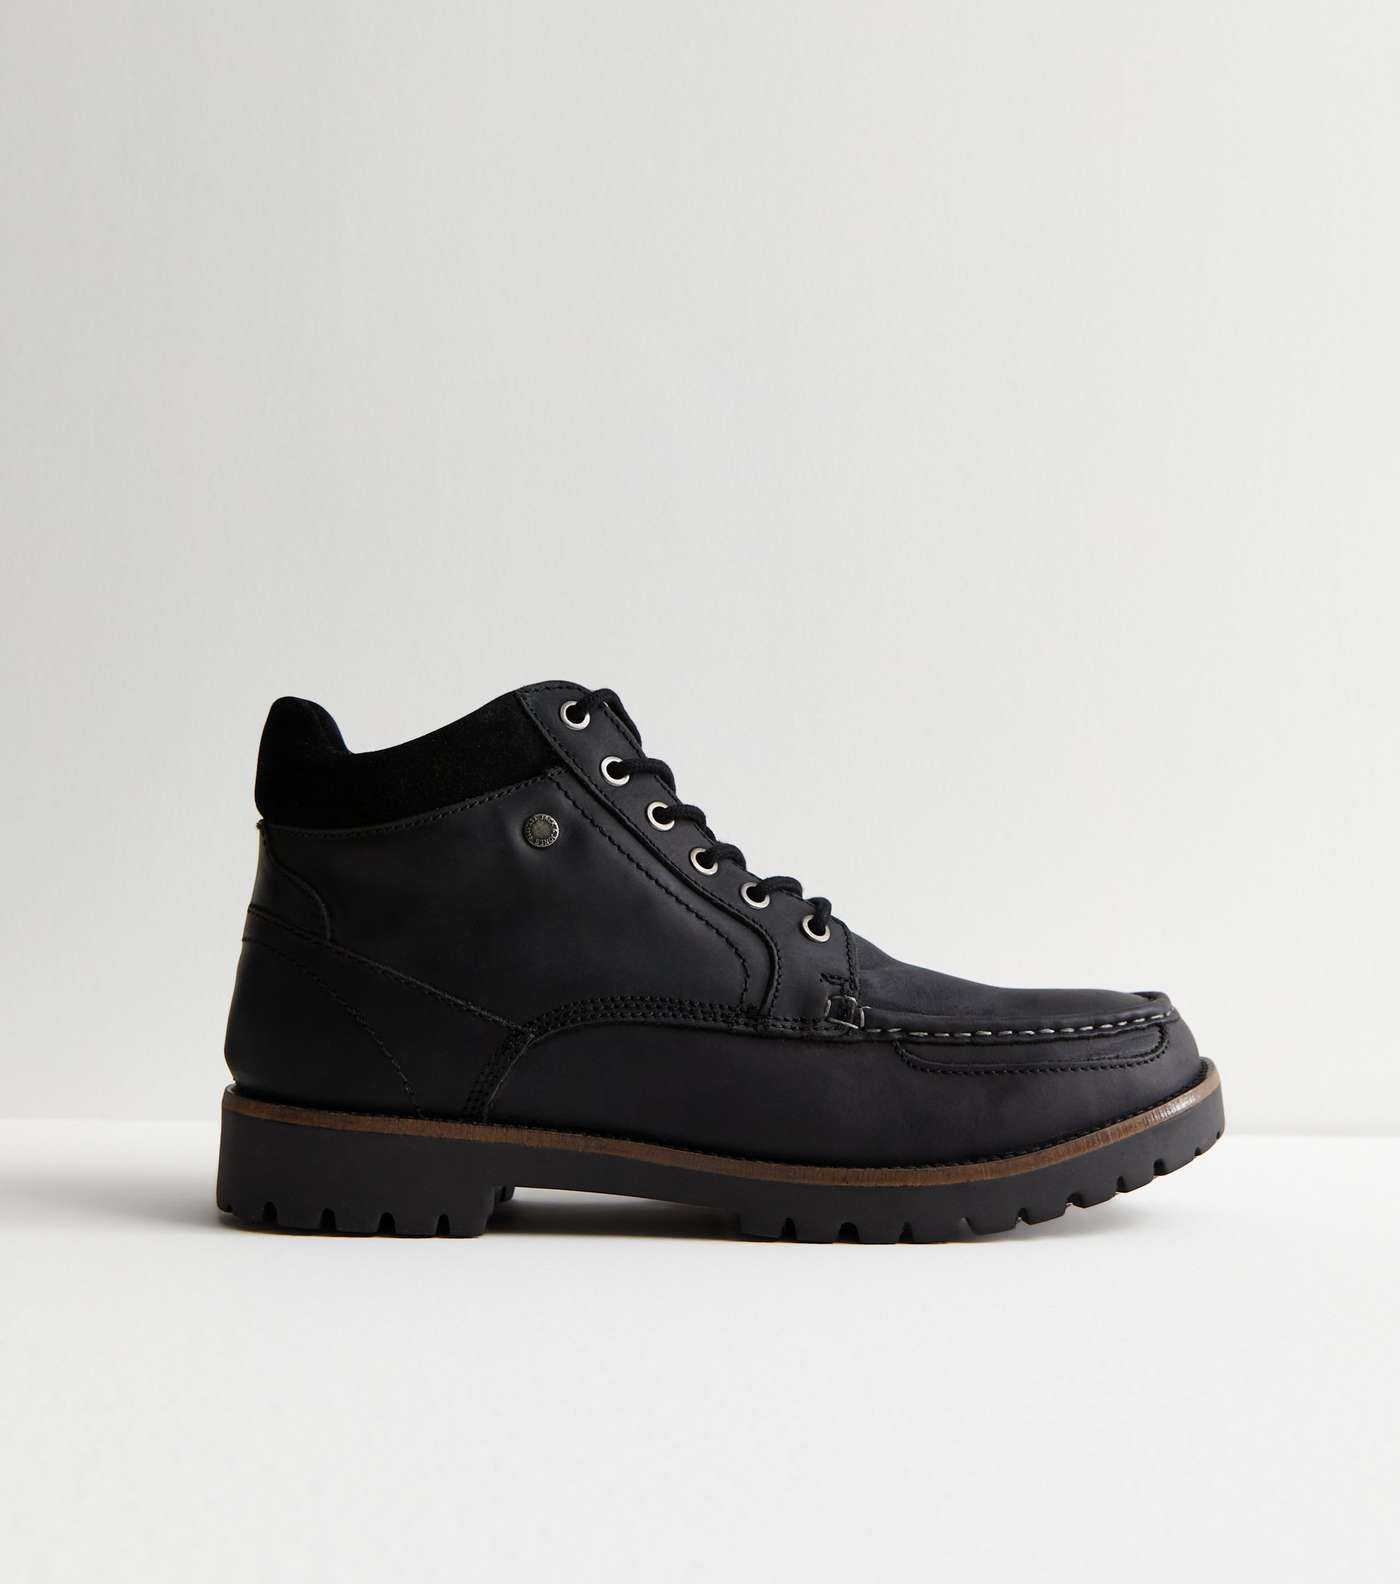 Jack & Jones Black Leather-Look Boots Image 3